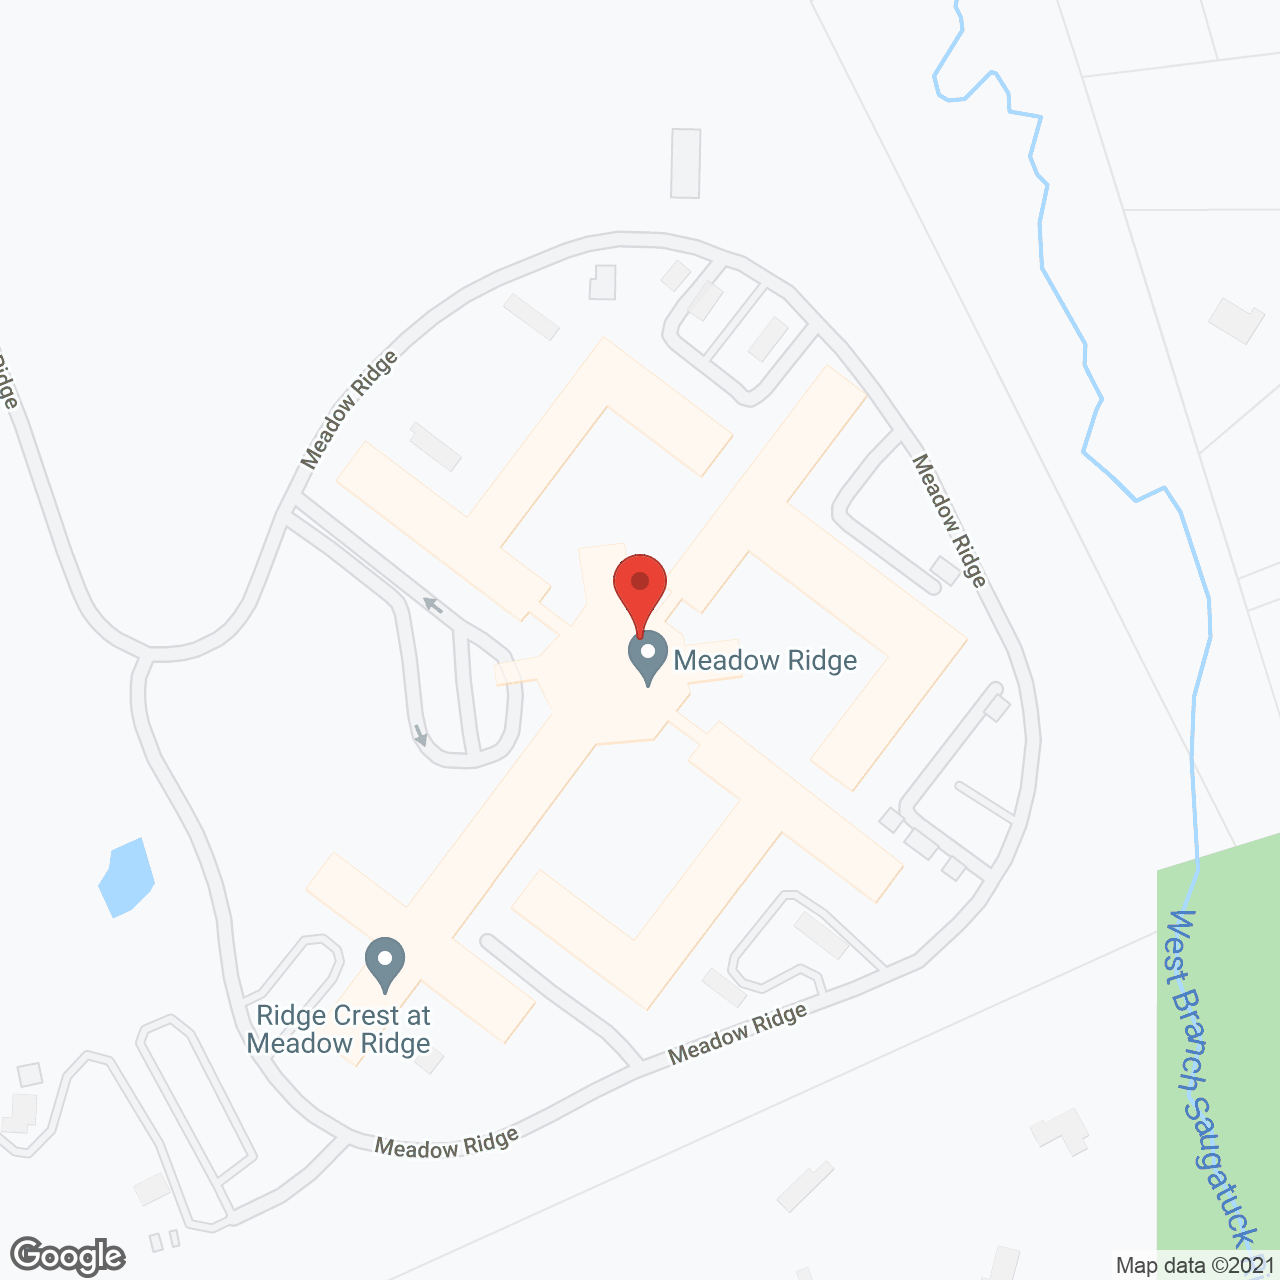 Meadow Ridge in google map